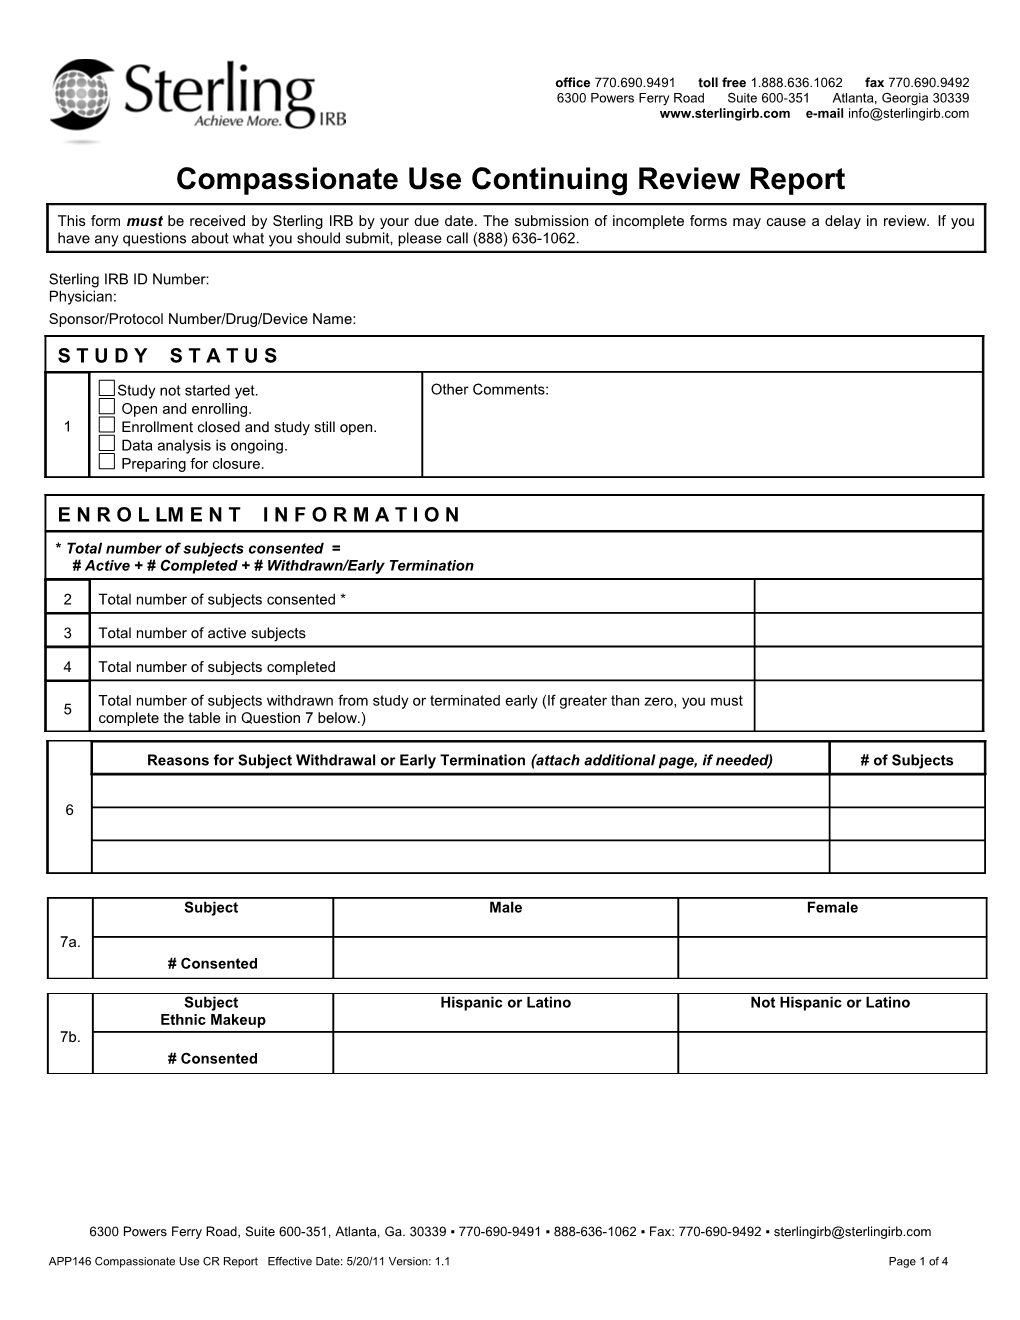 Site Continuing Review Status Report